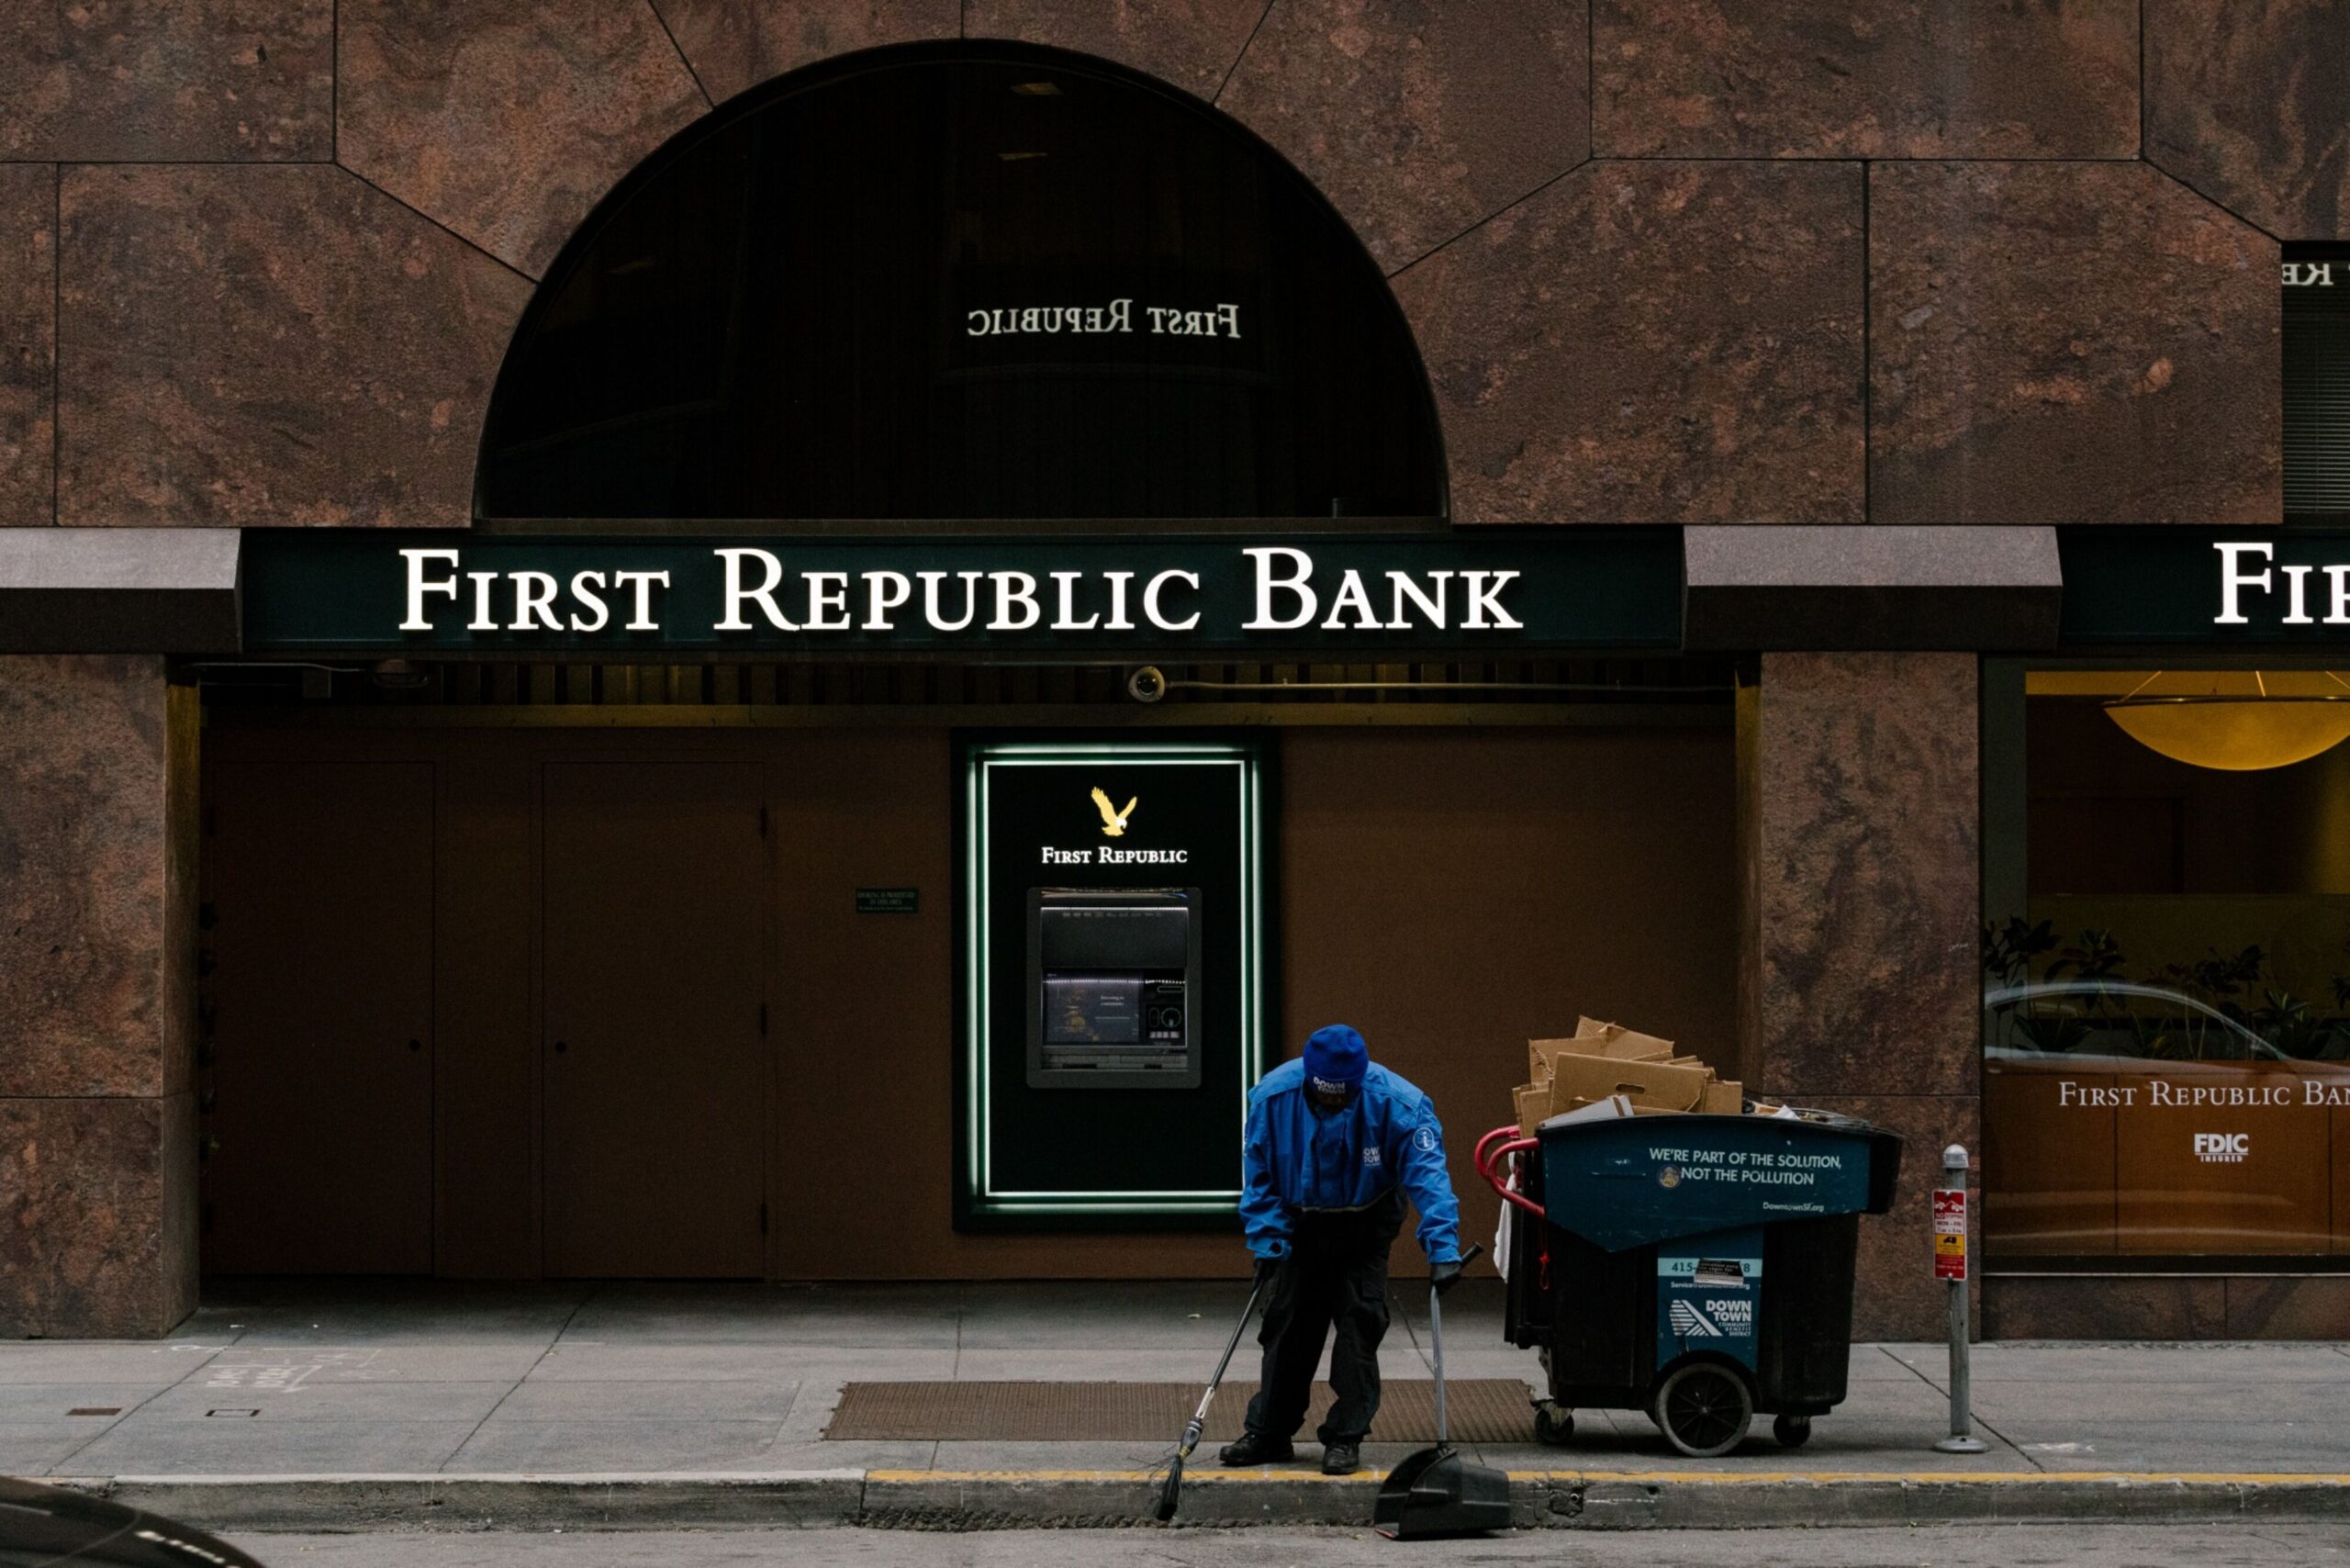 First Republic Regulators Rush to Fix Crisis as Banks Make Bids